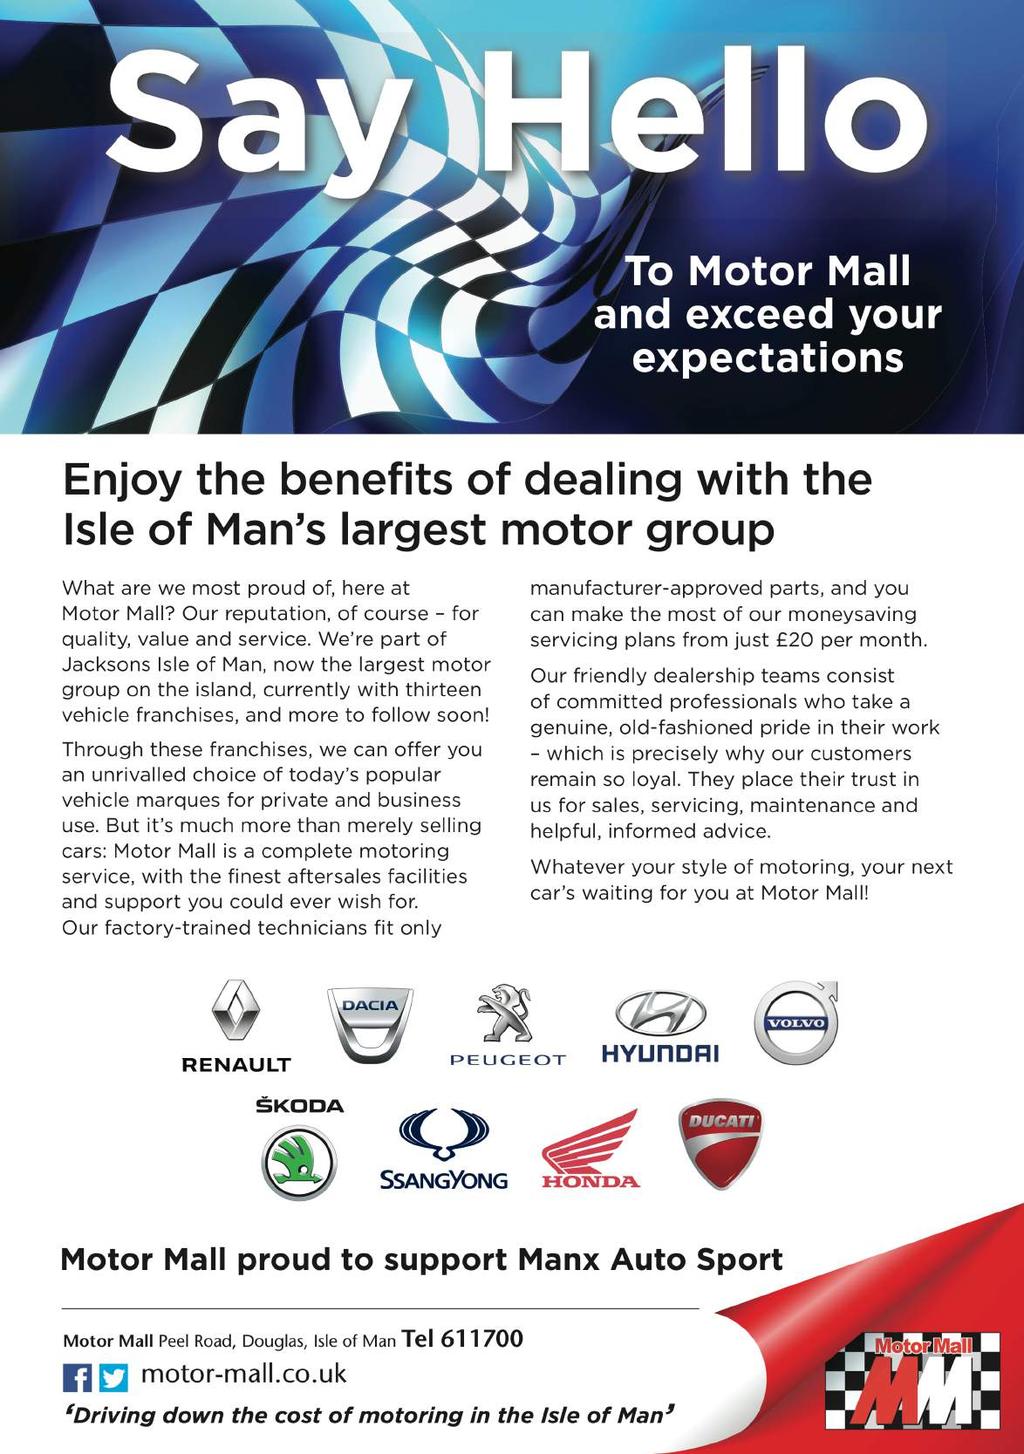 Manx Auto Sport Limited